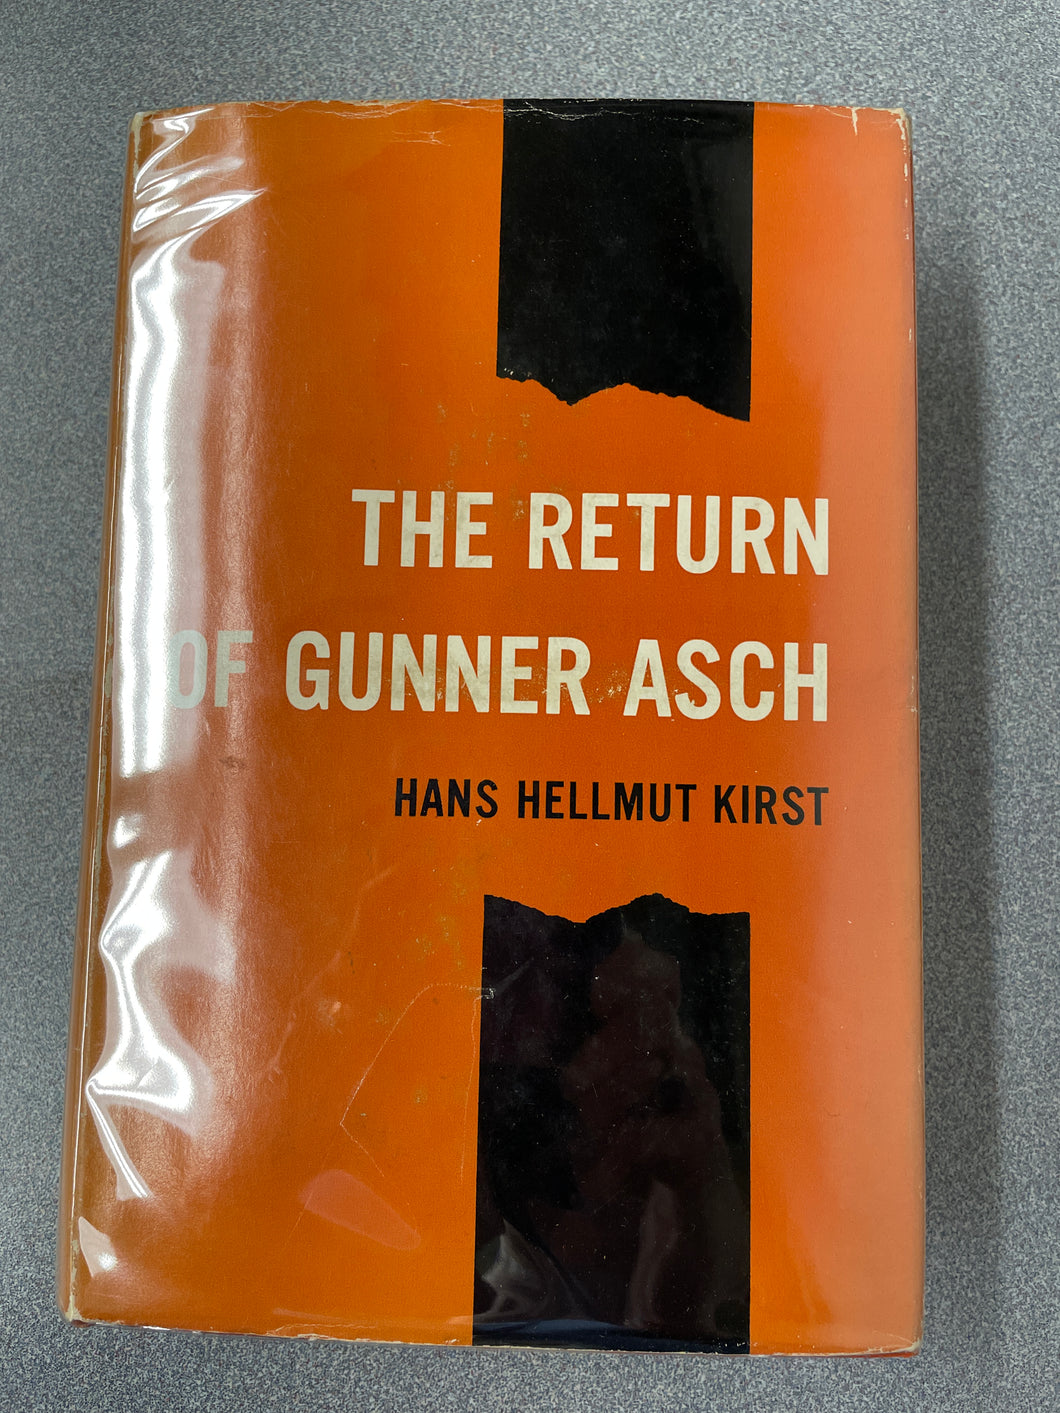 Kirst, Hans Hellmut, The Return of Gunner Asch [1957] CC 11/23